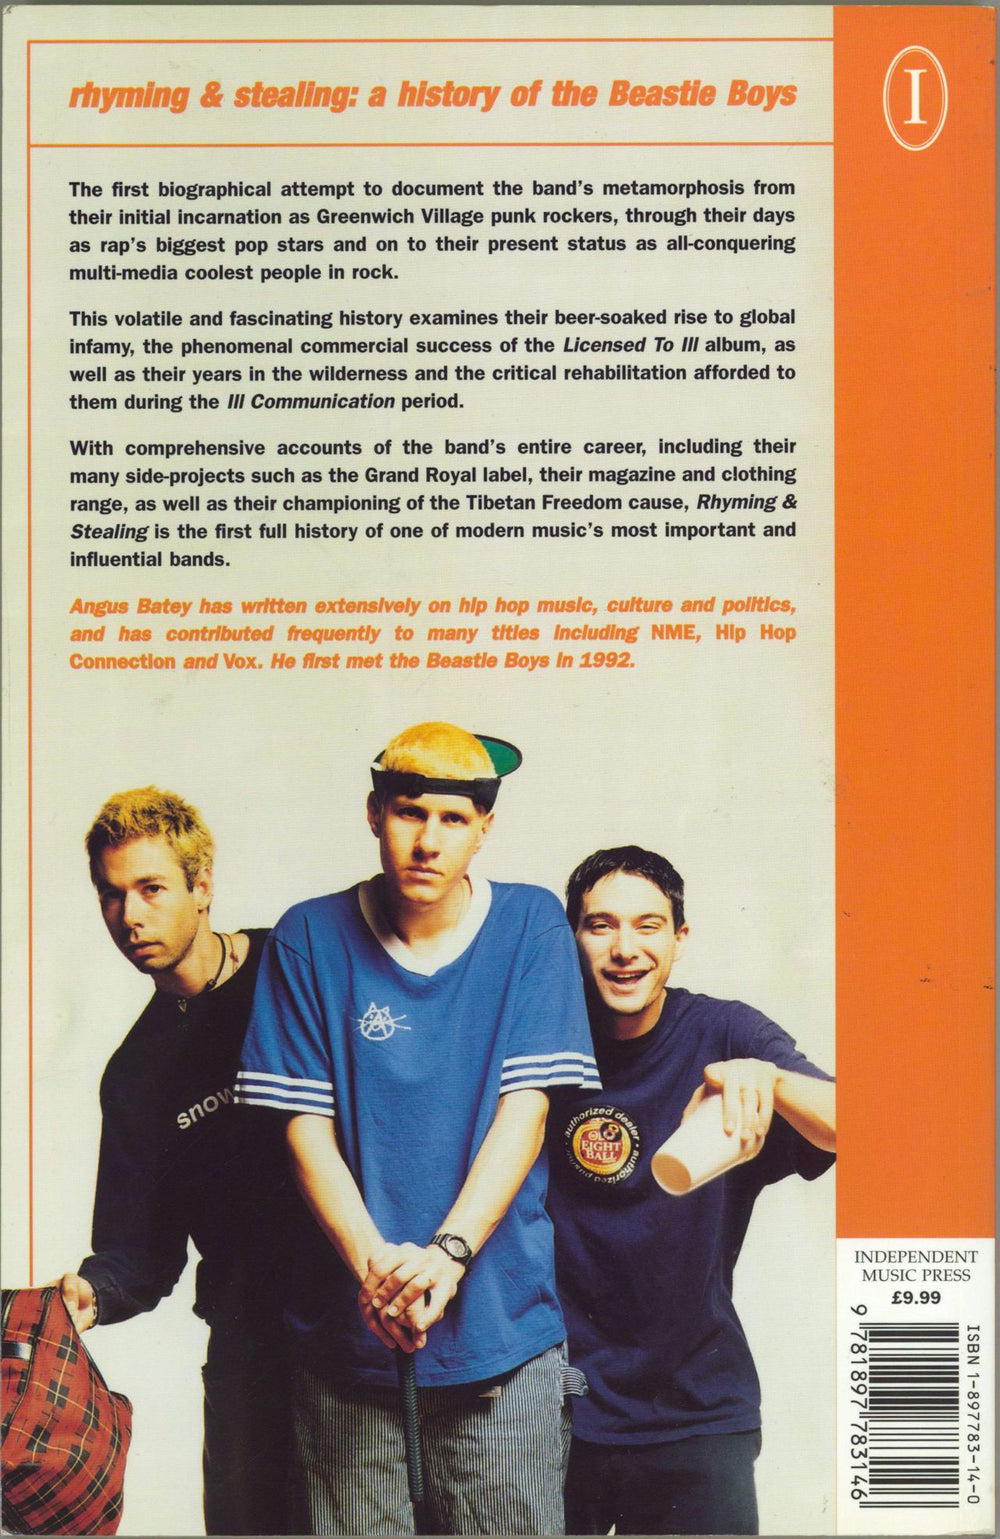 Beastie Boys Rhyming & Stealing: A History Of The Beastie Boys UK book 9781897783146